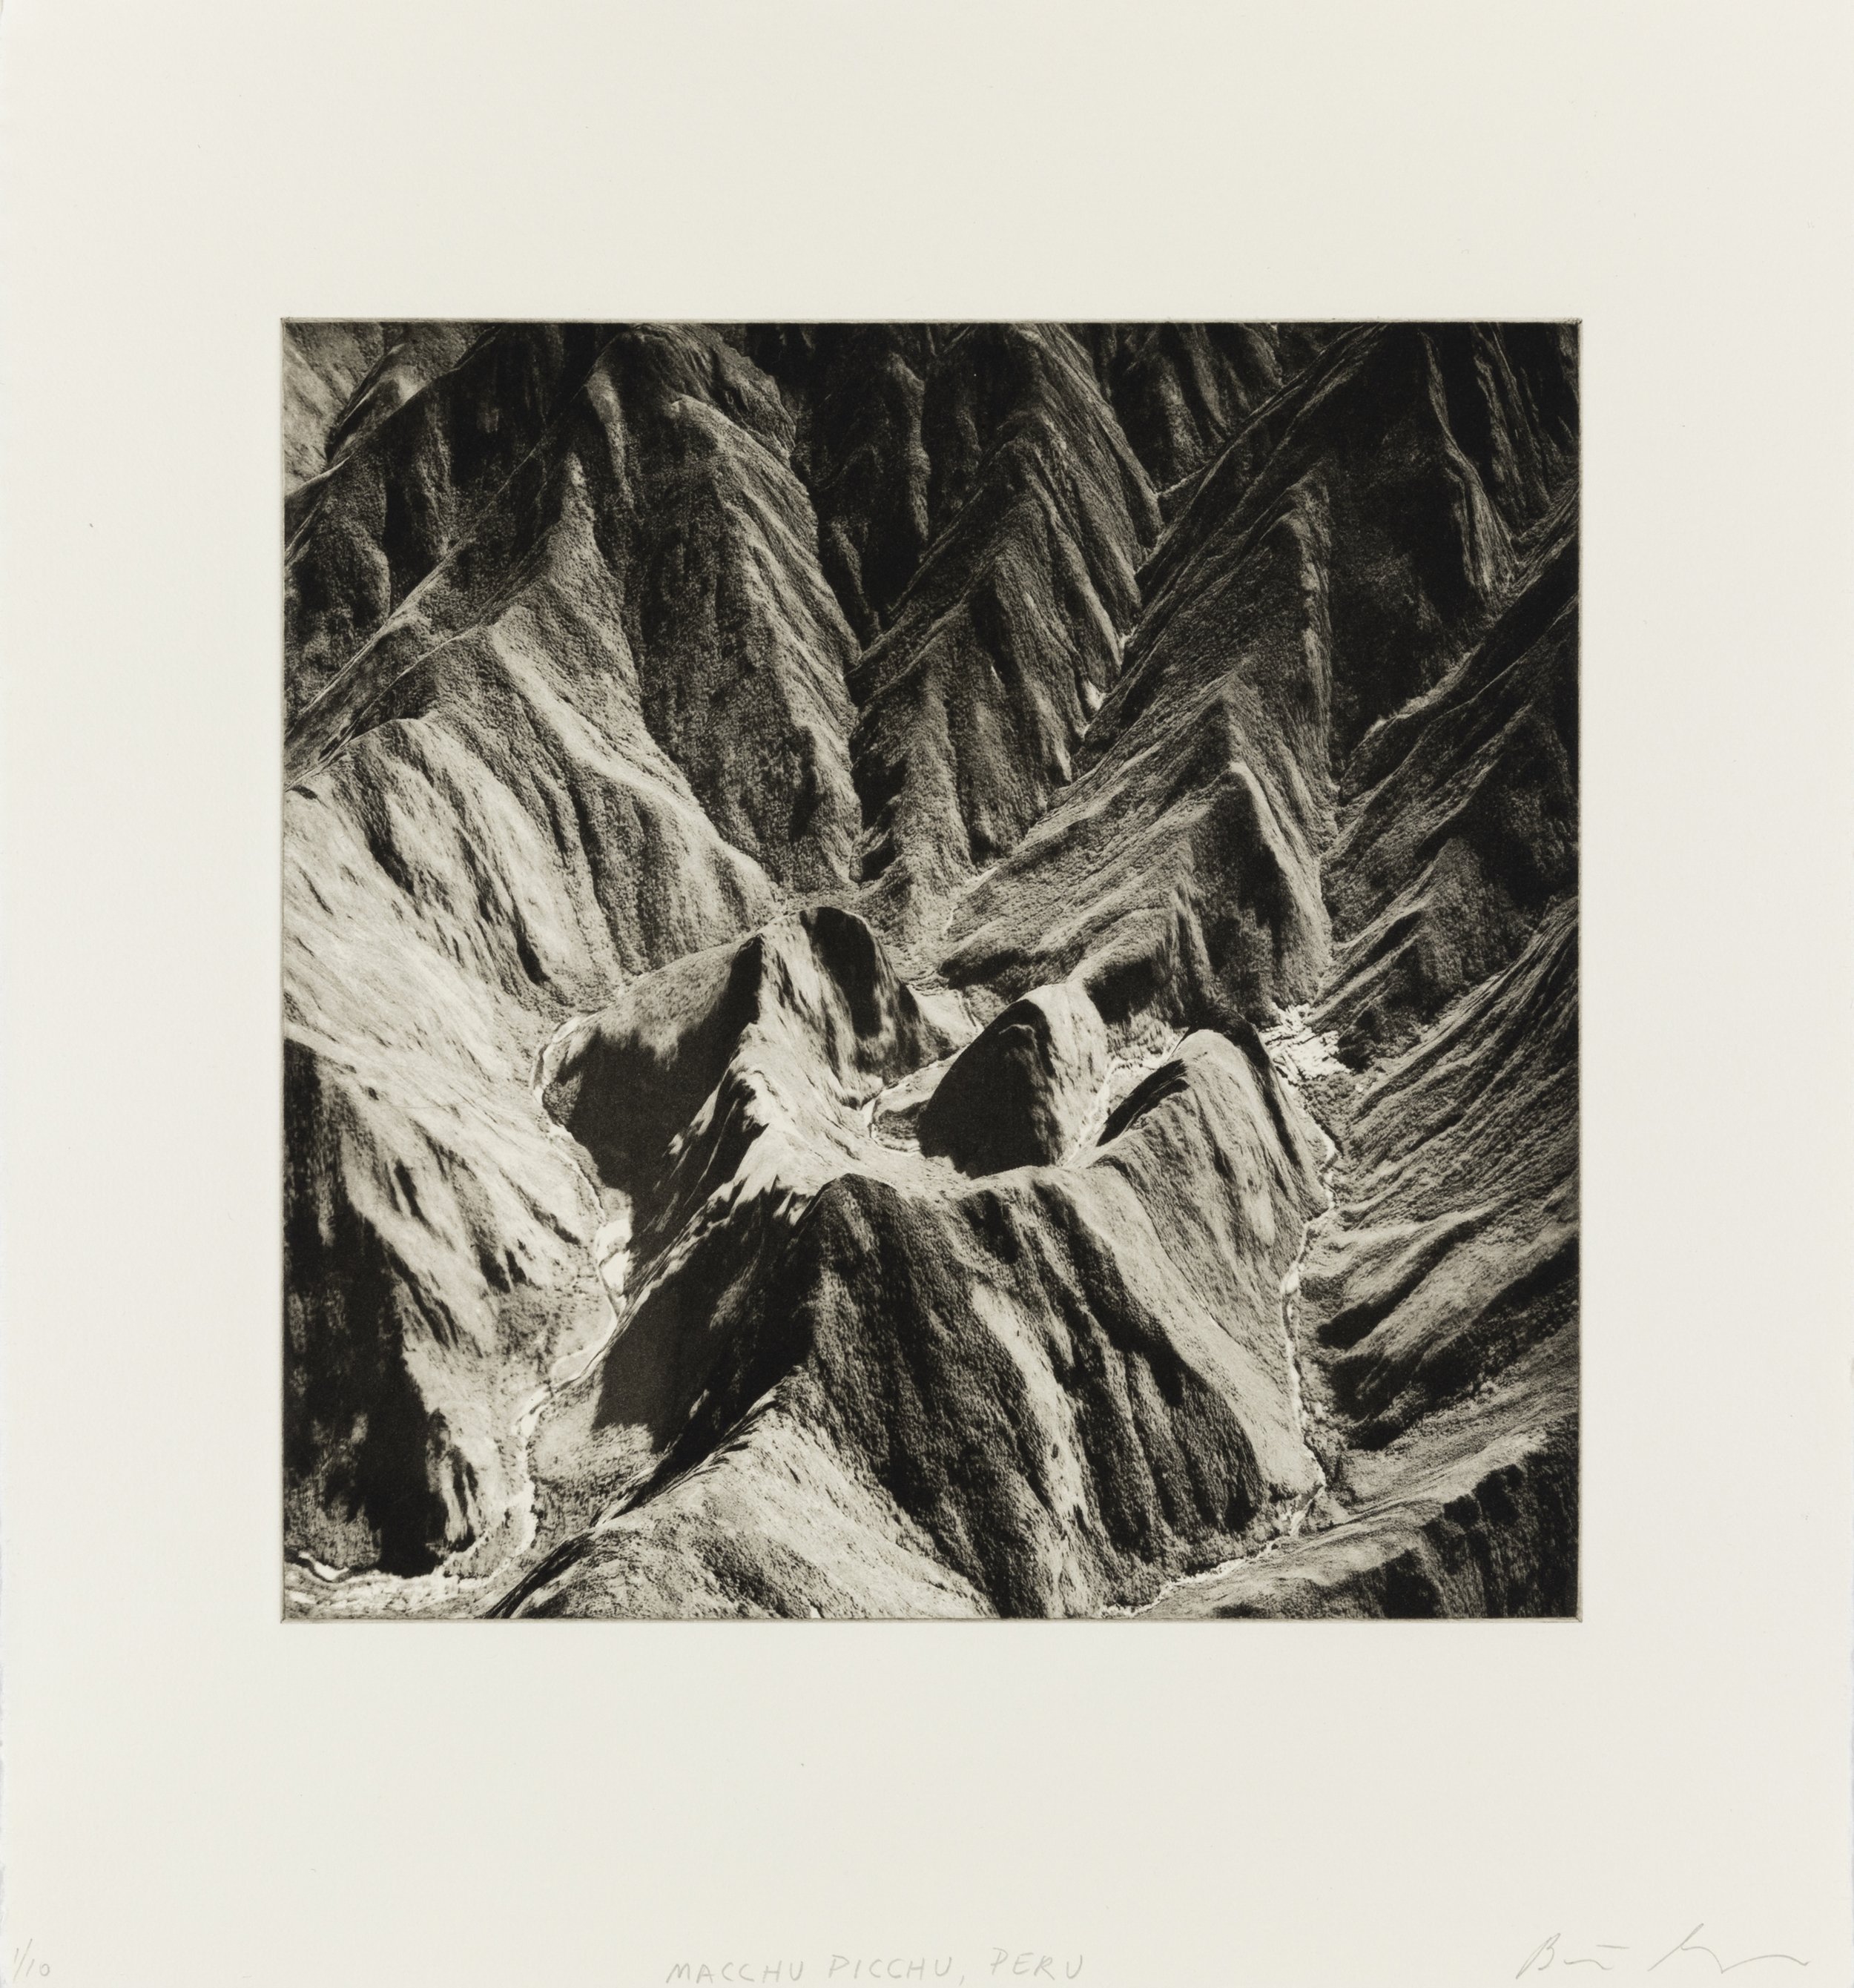    Machu Picchu, Peru, 2021   Copperplate photogravure etching on cotton rag paper, plate size; 10.6 x 10.6, paper size; 16 x 15.5, edition 10  